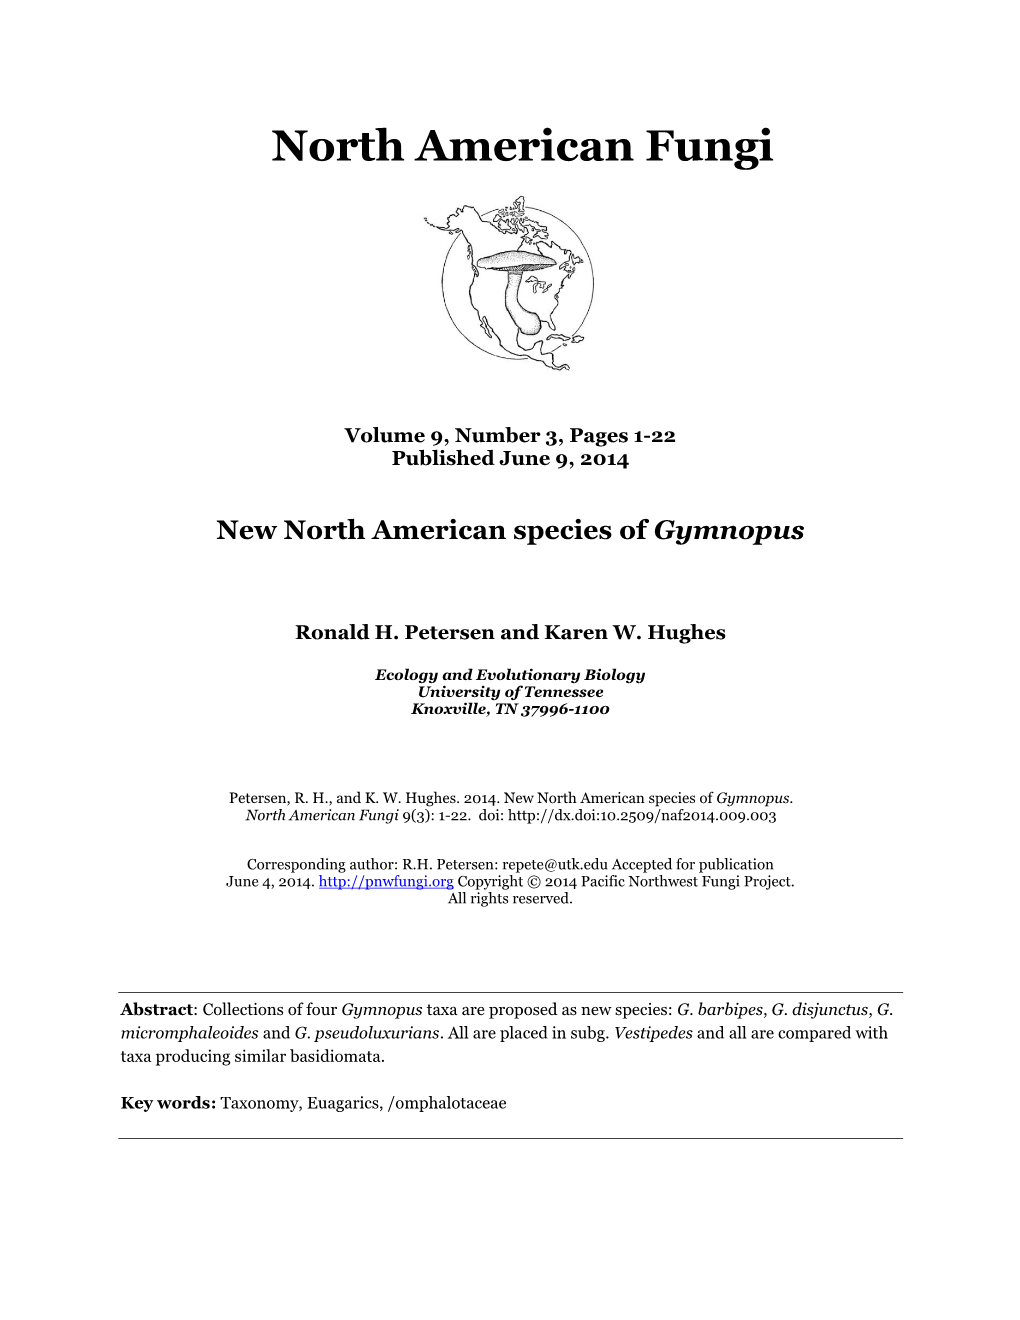 New North American Species of Gymnopus